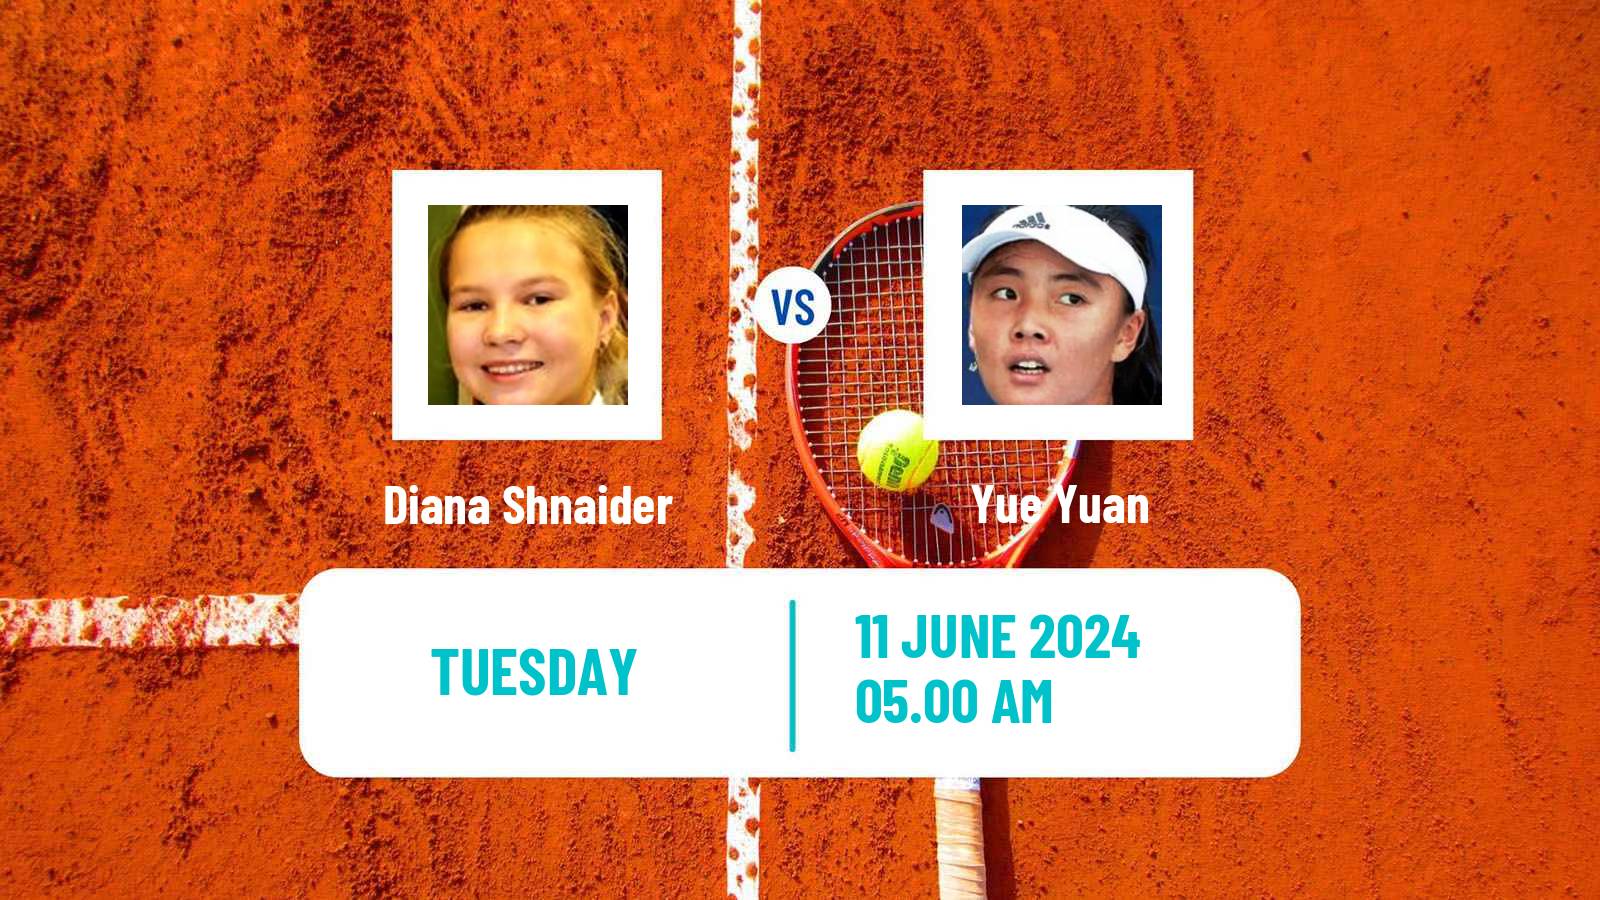 Tennis WTA Hertogenbosch Diana Shnaider - Yue Yuan